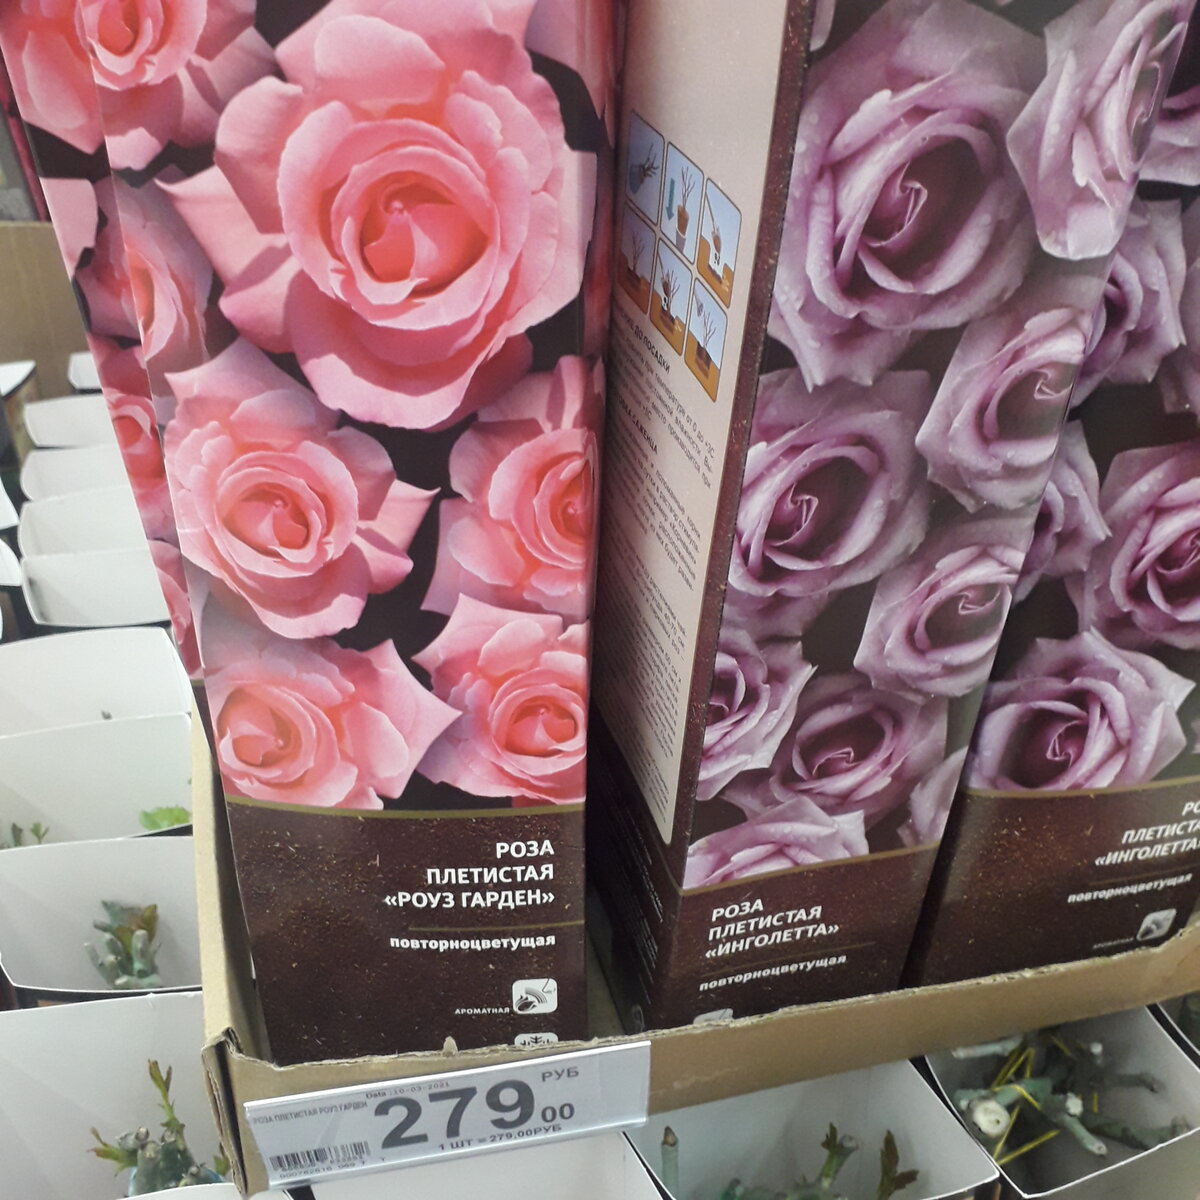 Валберис розы саженцы. Саженцы роз в Ашане. Саженцы роз в коробке. Розы из Ашана. Ашан цветы розы.